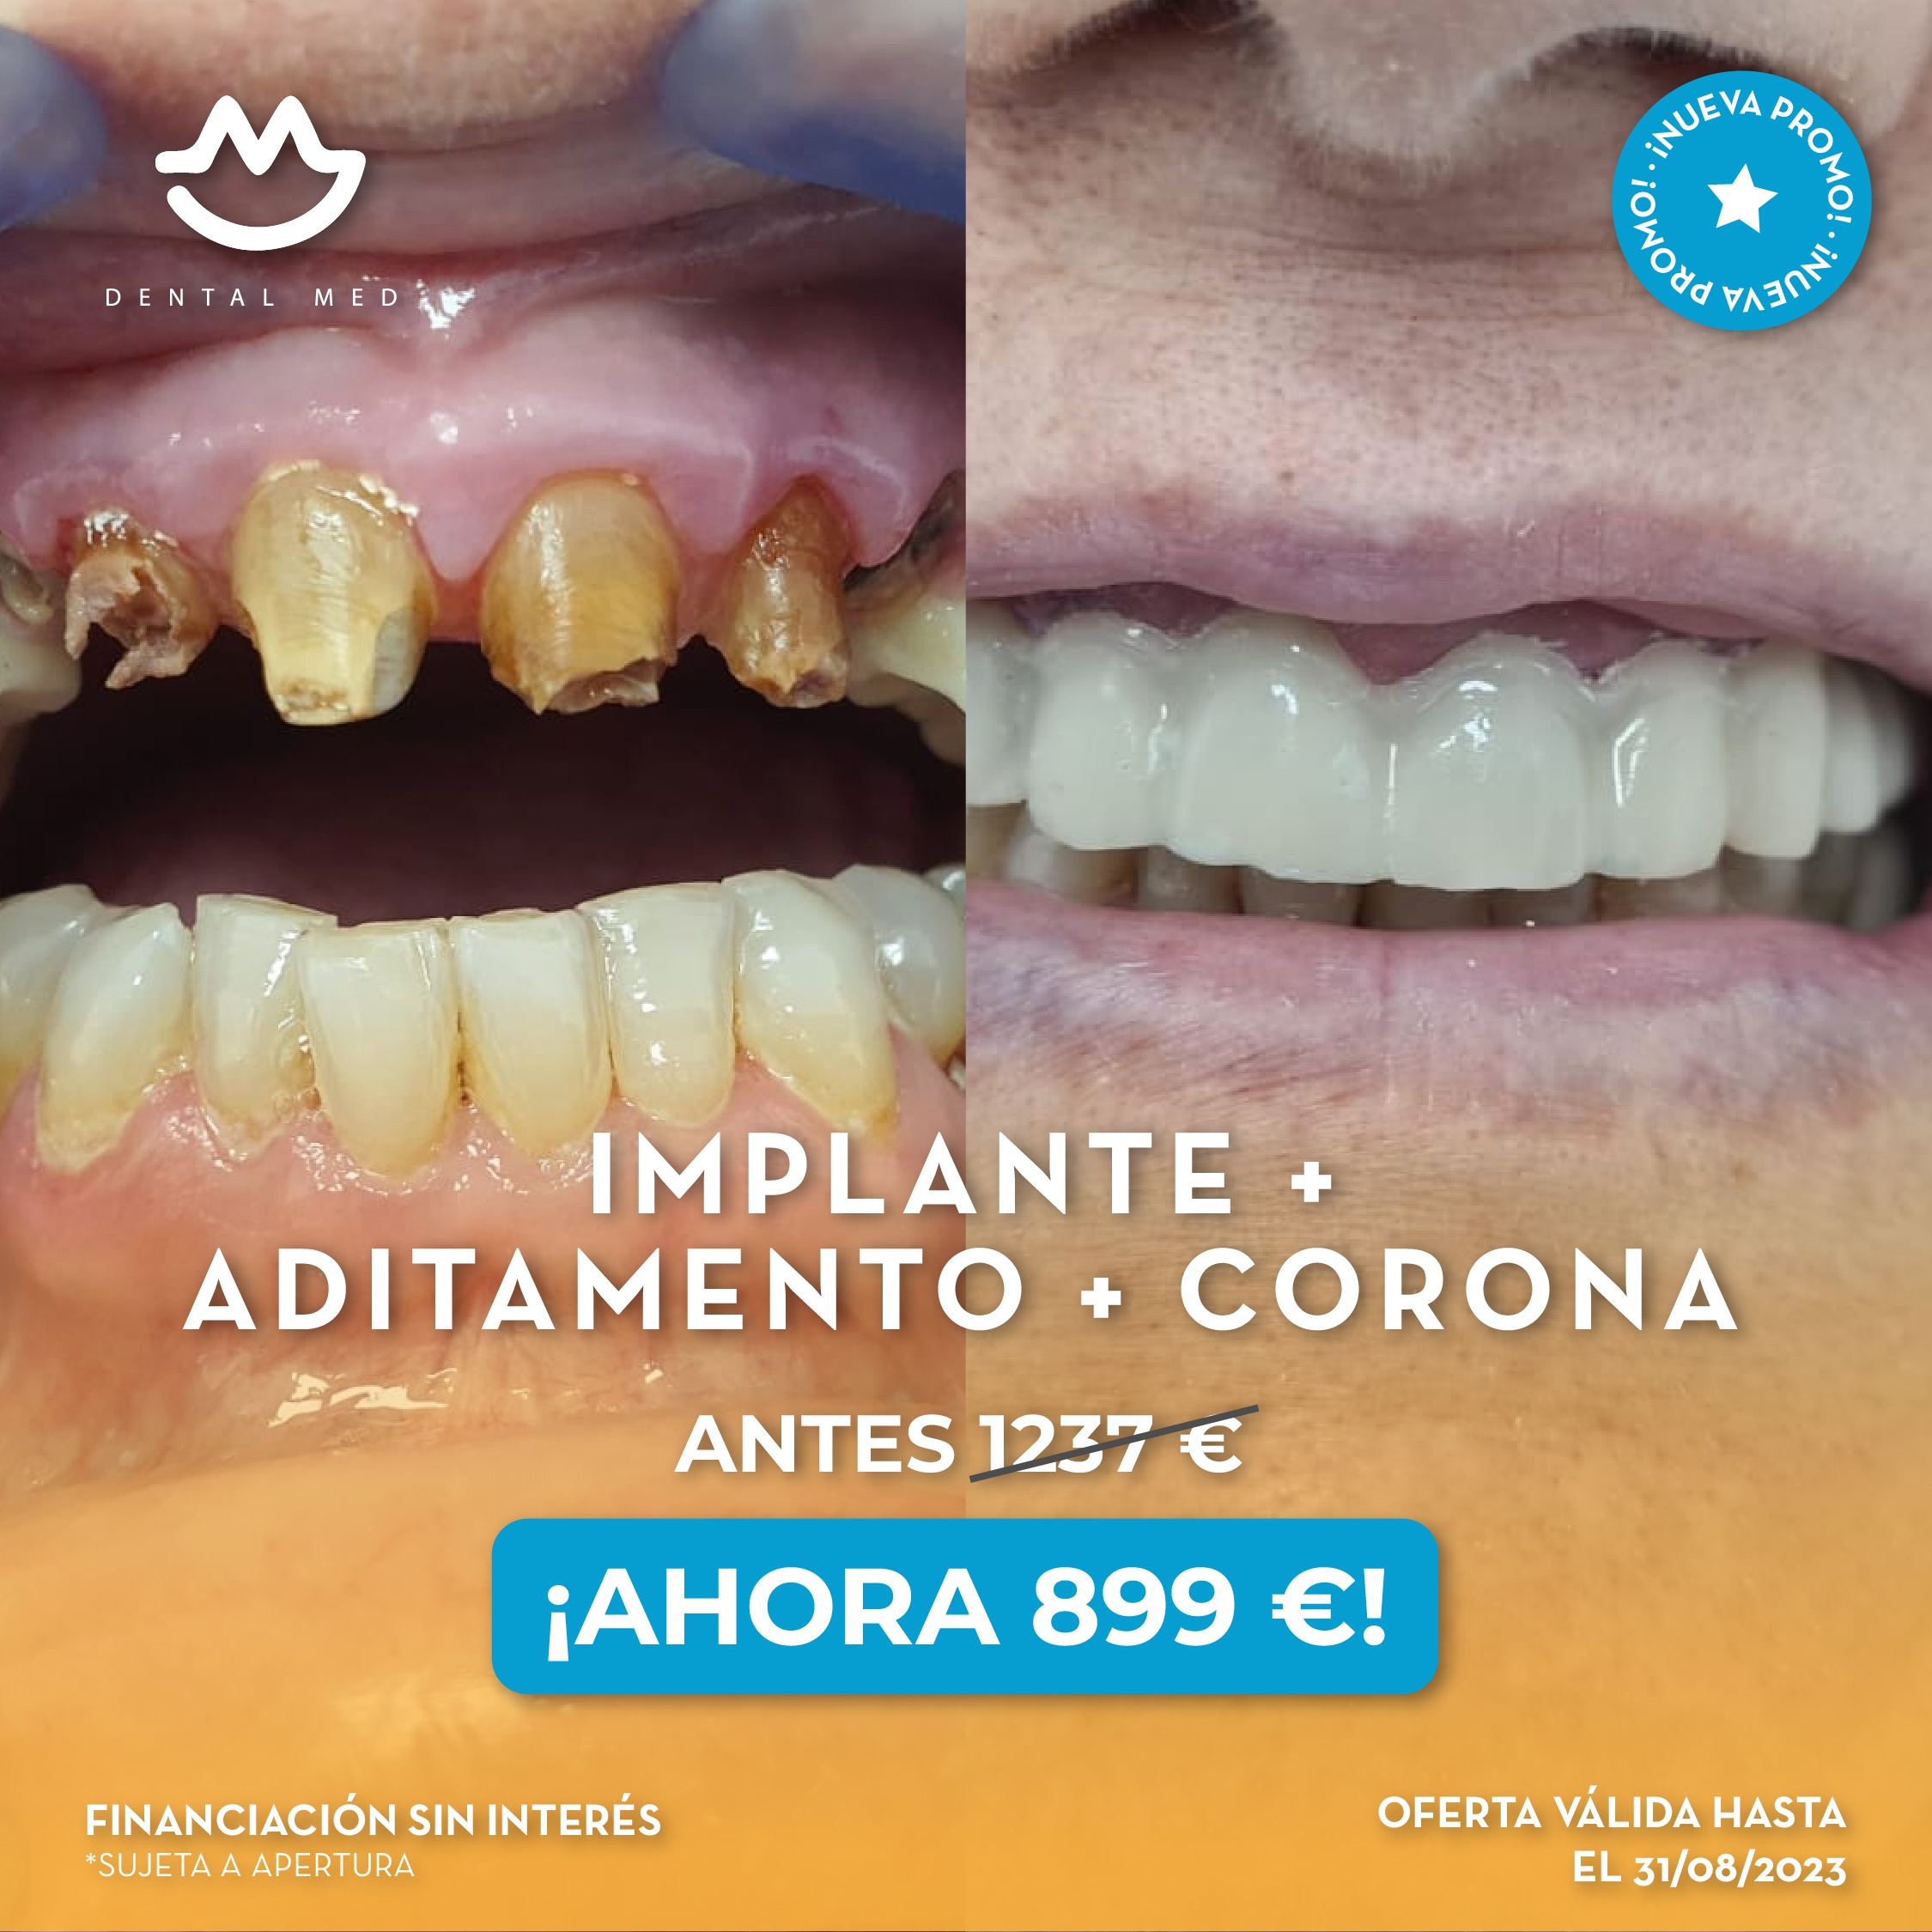 Dental Med, Clínica Dental - Implante - Aditamento - Corona - Odontología Sevilla - Ortodoncia - Oferta Implante - Sevilla